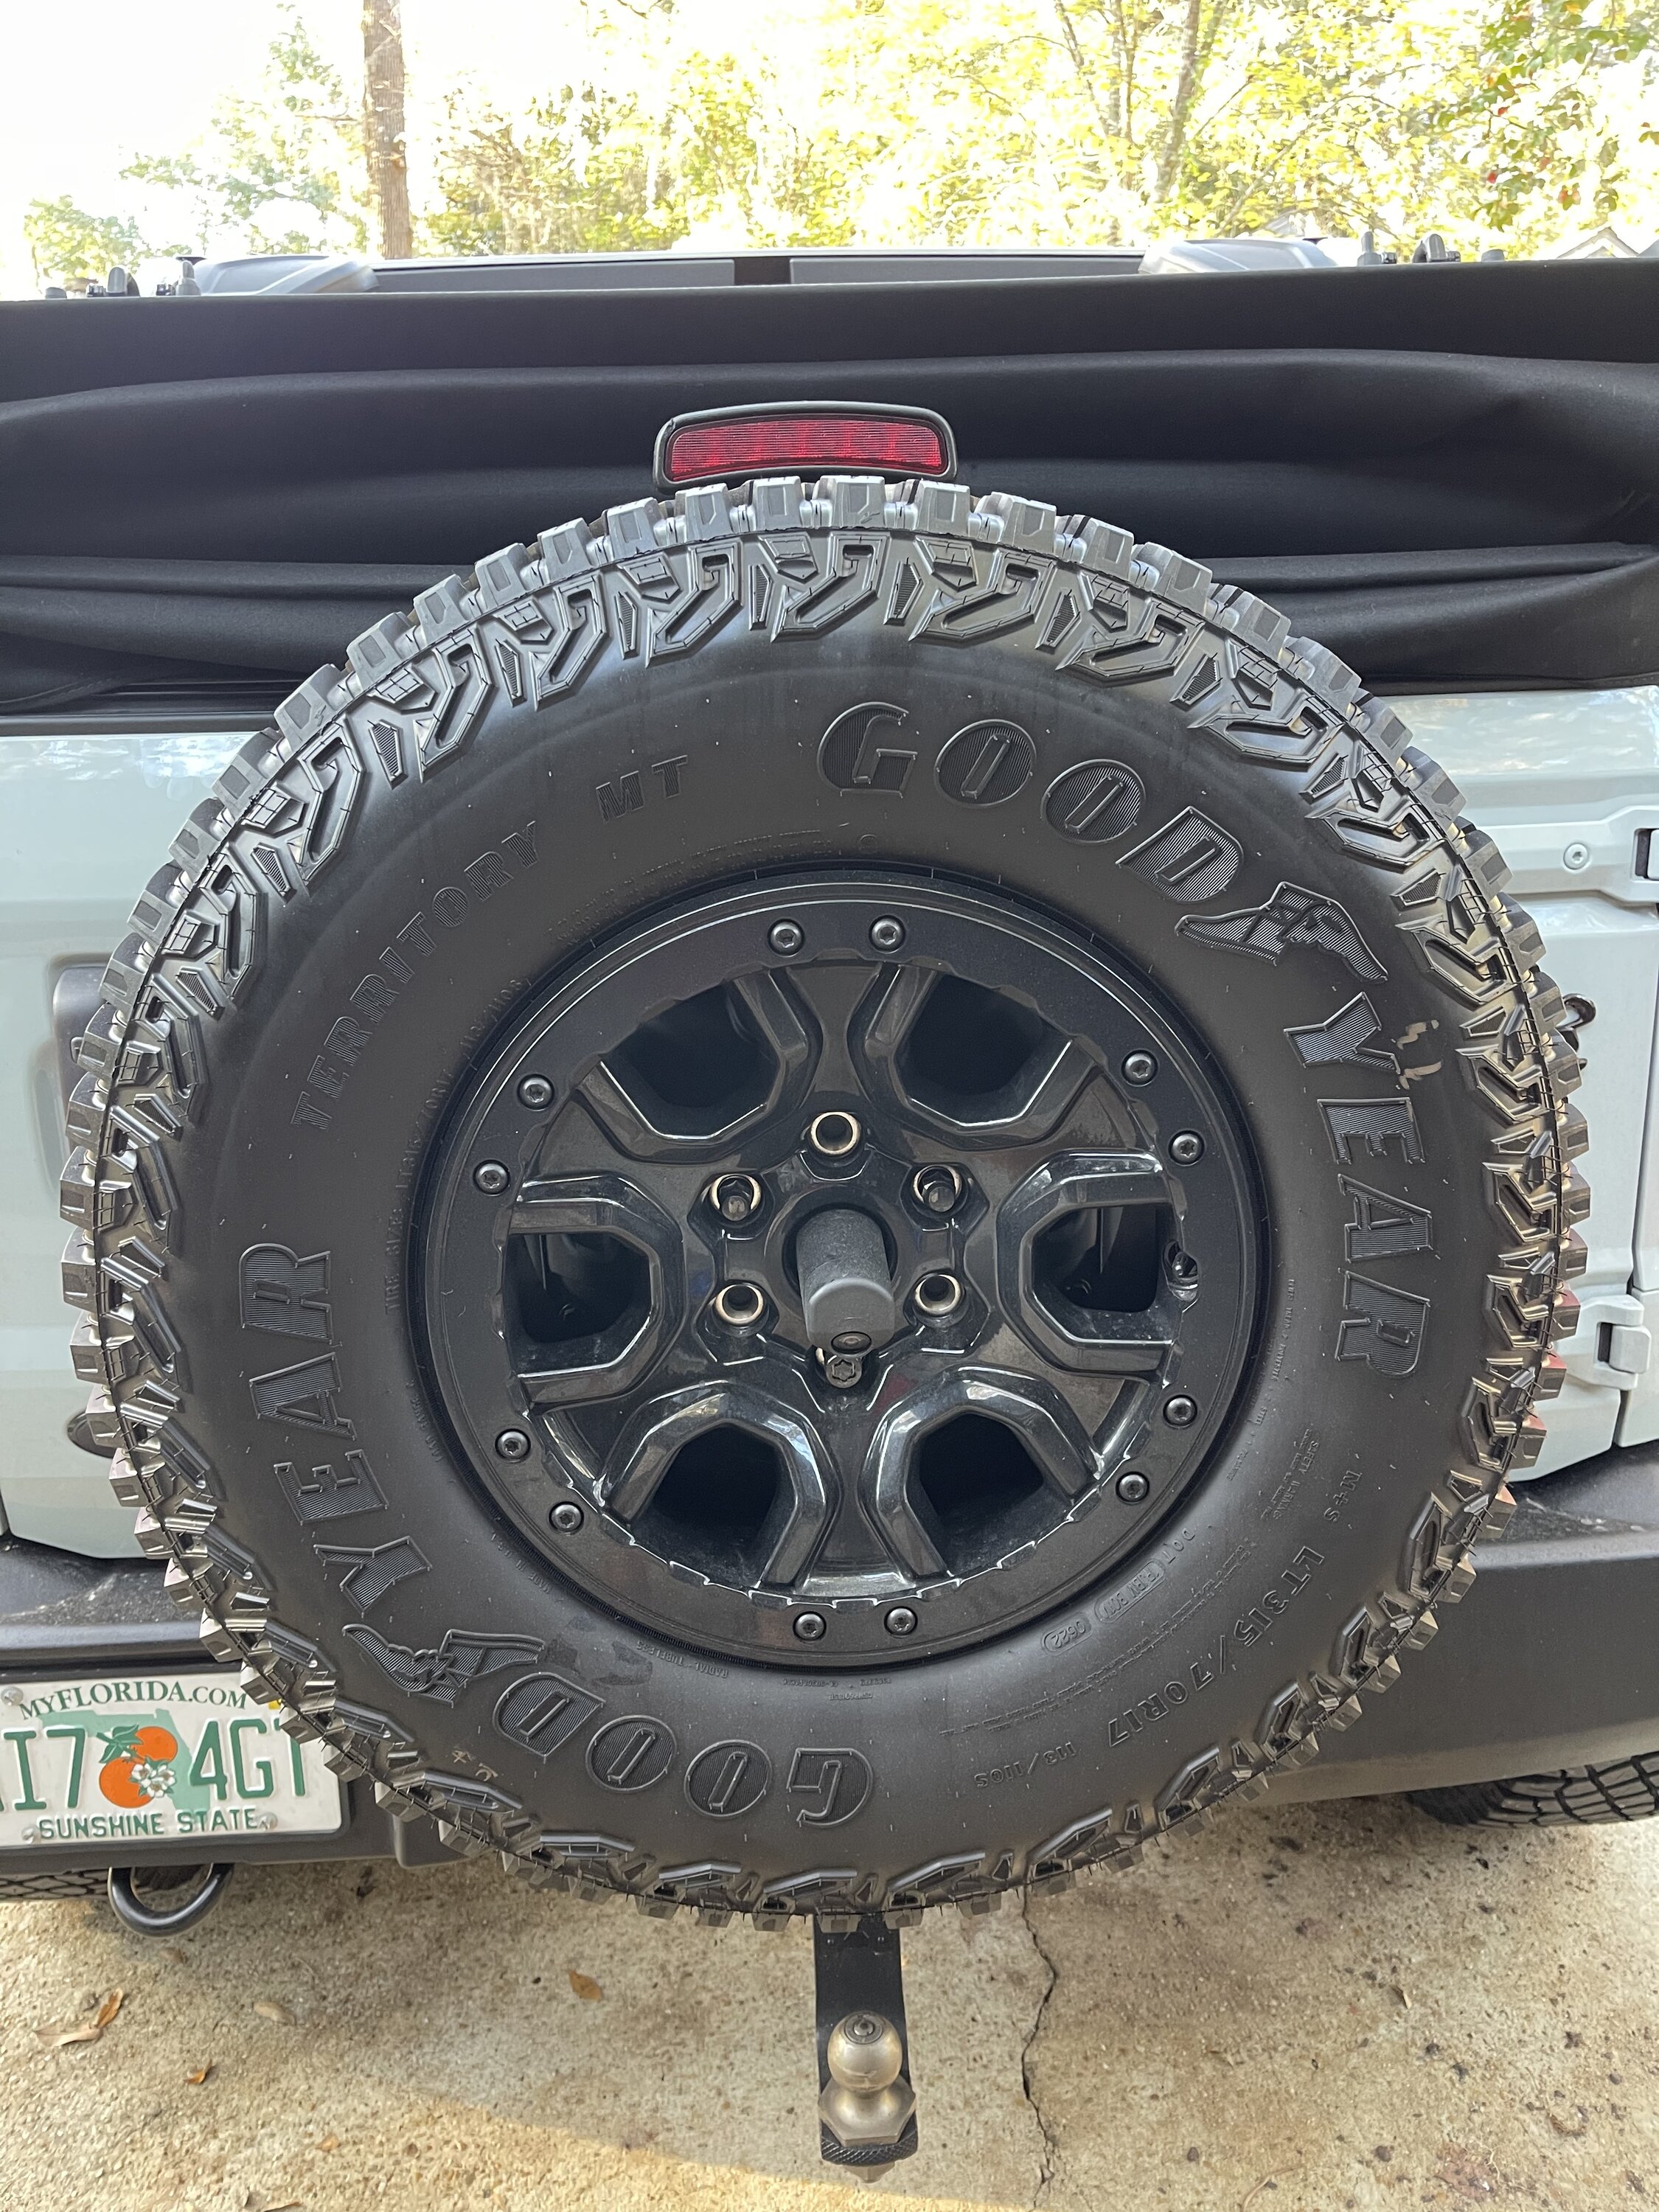 Ford Bronco Selling set of 5 OEM Sasquatch black wheels - $1,000 D566784B-E682-4062-A979-2280F42B42EF